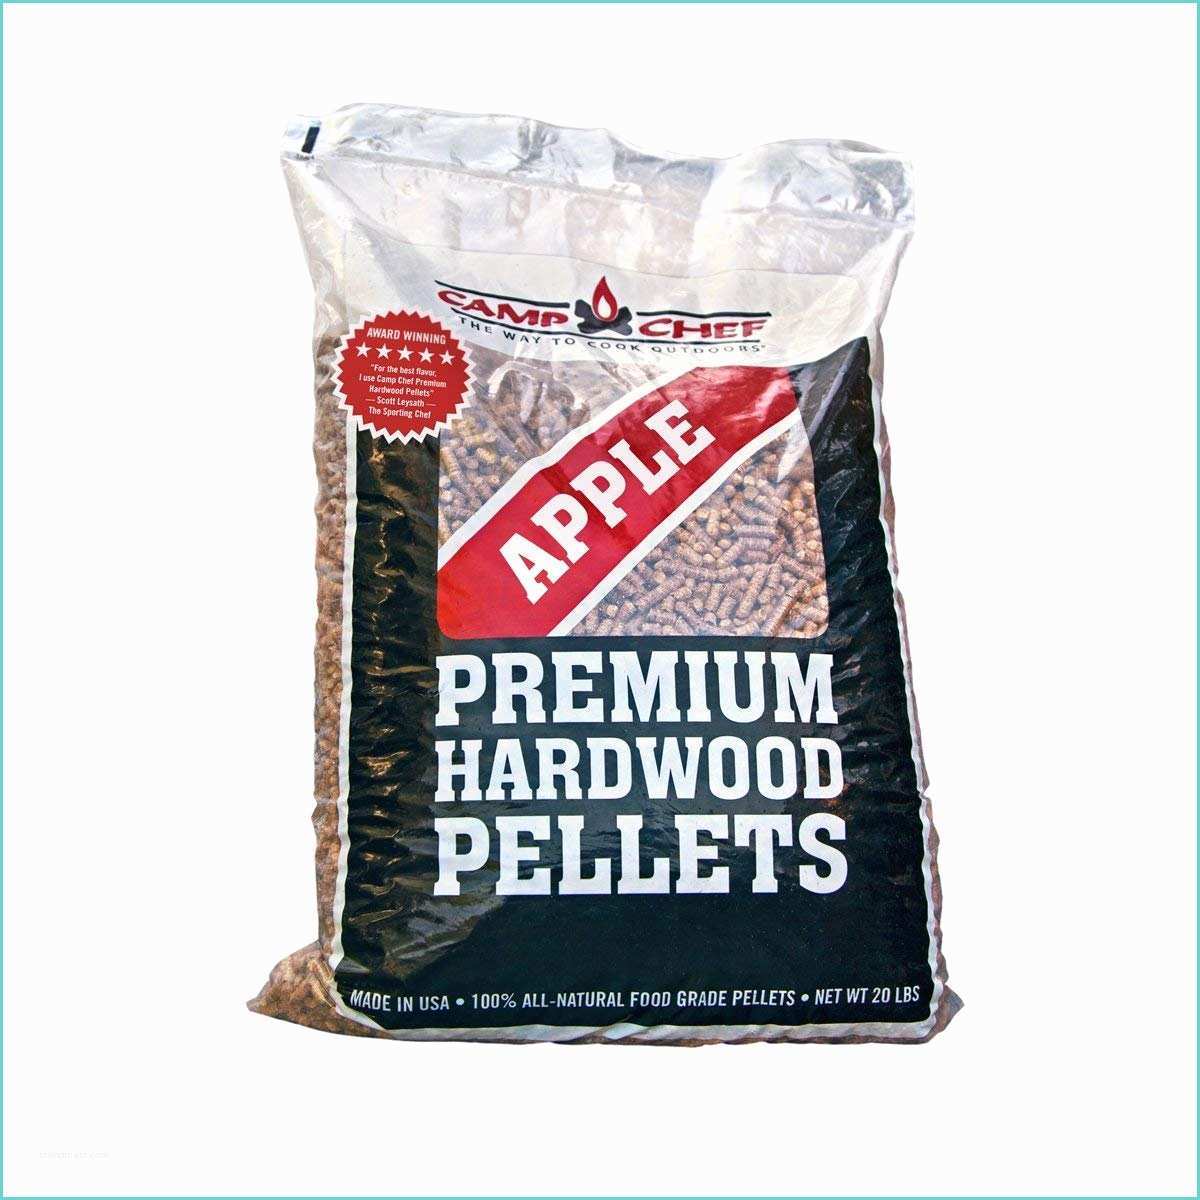 Premium Wood Pellets Prezzo Camp Chef Bag Of Premium Hardwood Applewood Pellets for